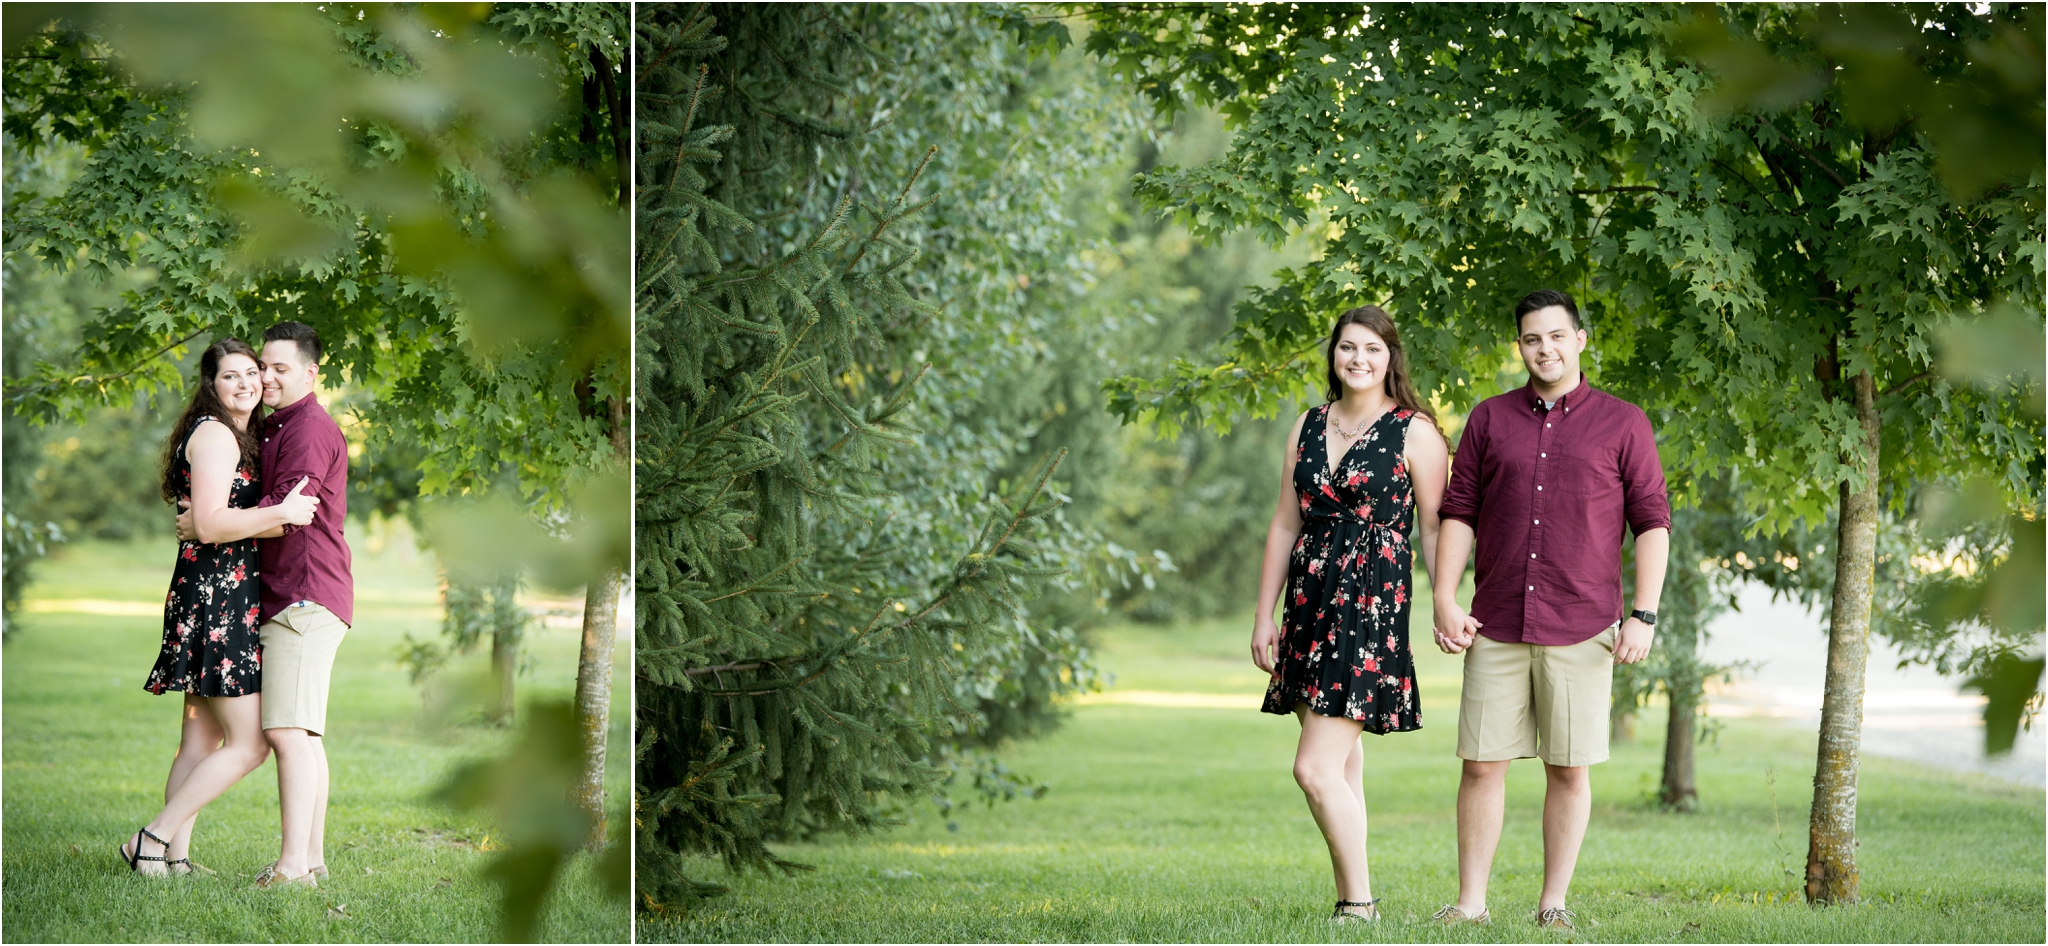 Fort Wayne Engagement Session | Sarah and Rachel Wedding Photographers | Salomon Farms 